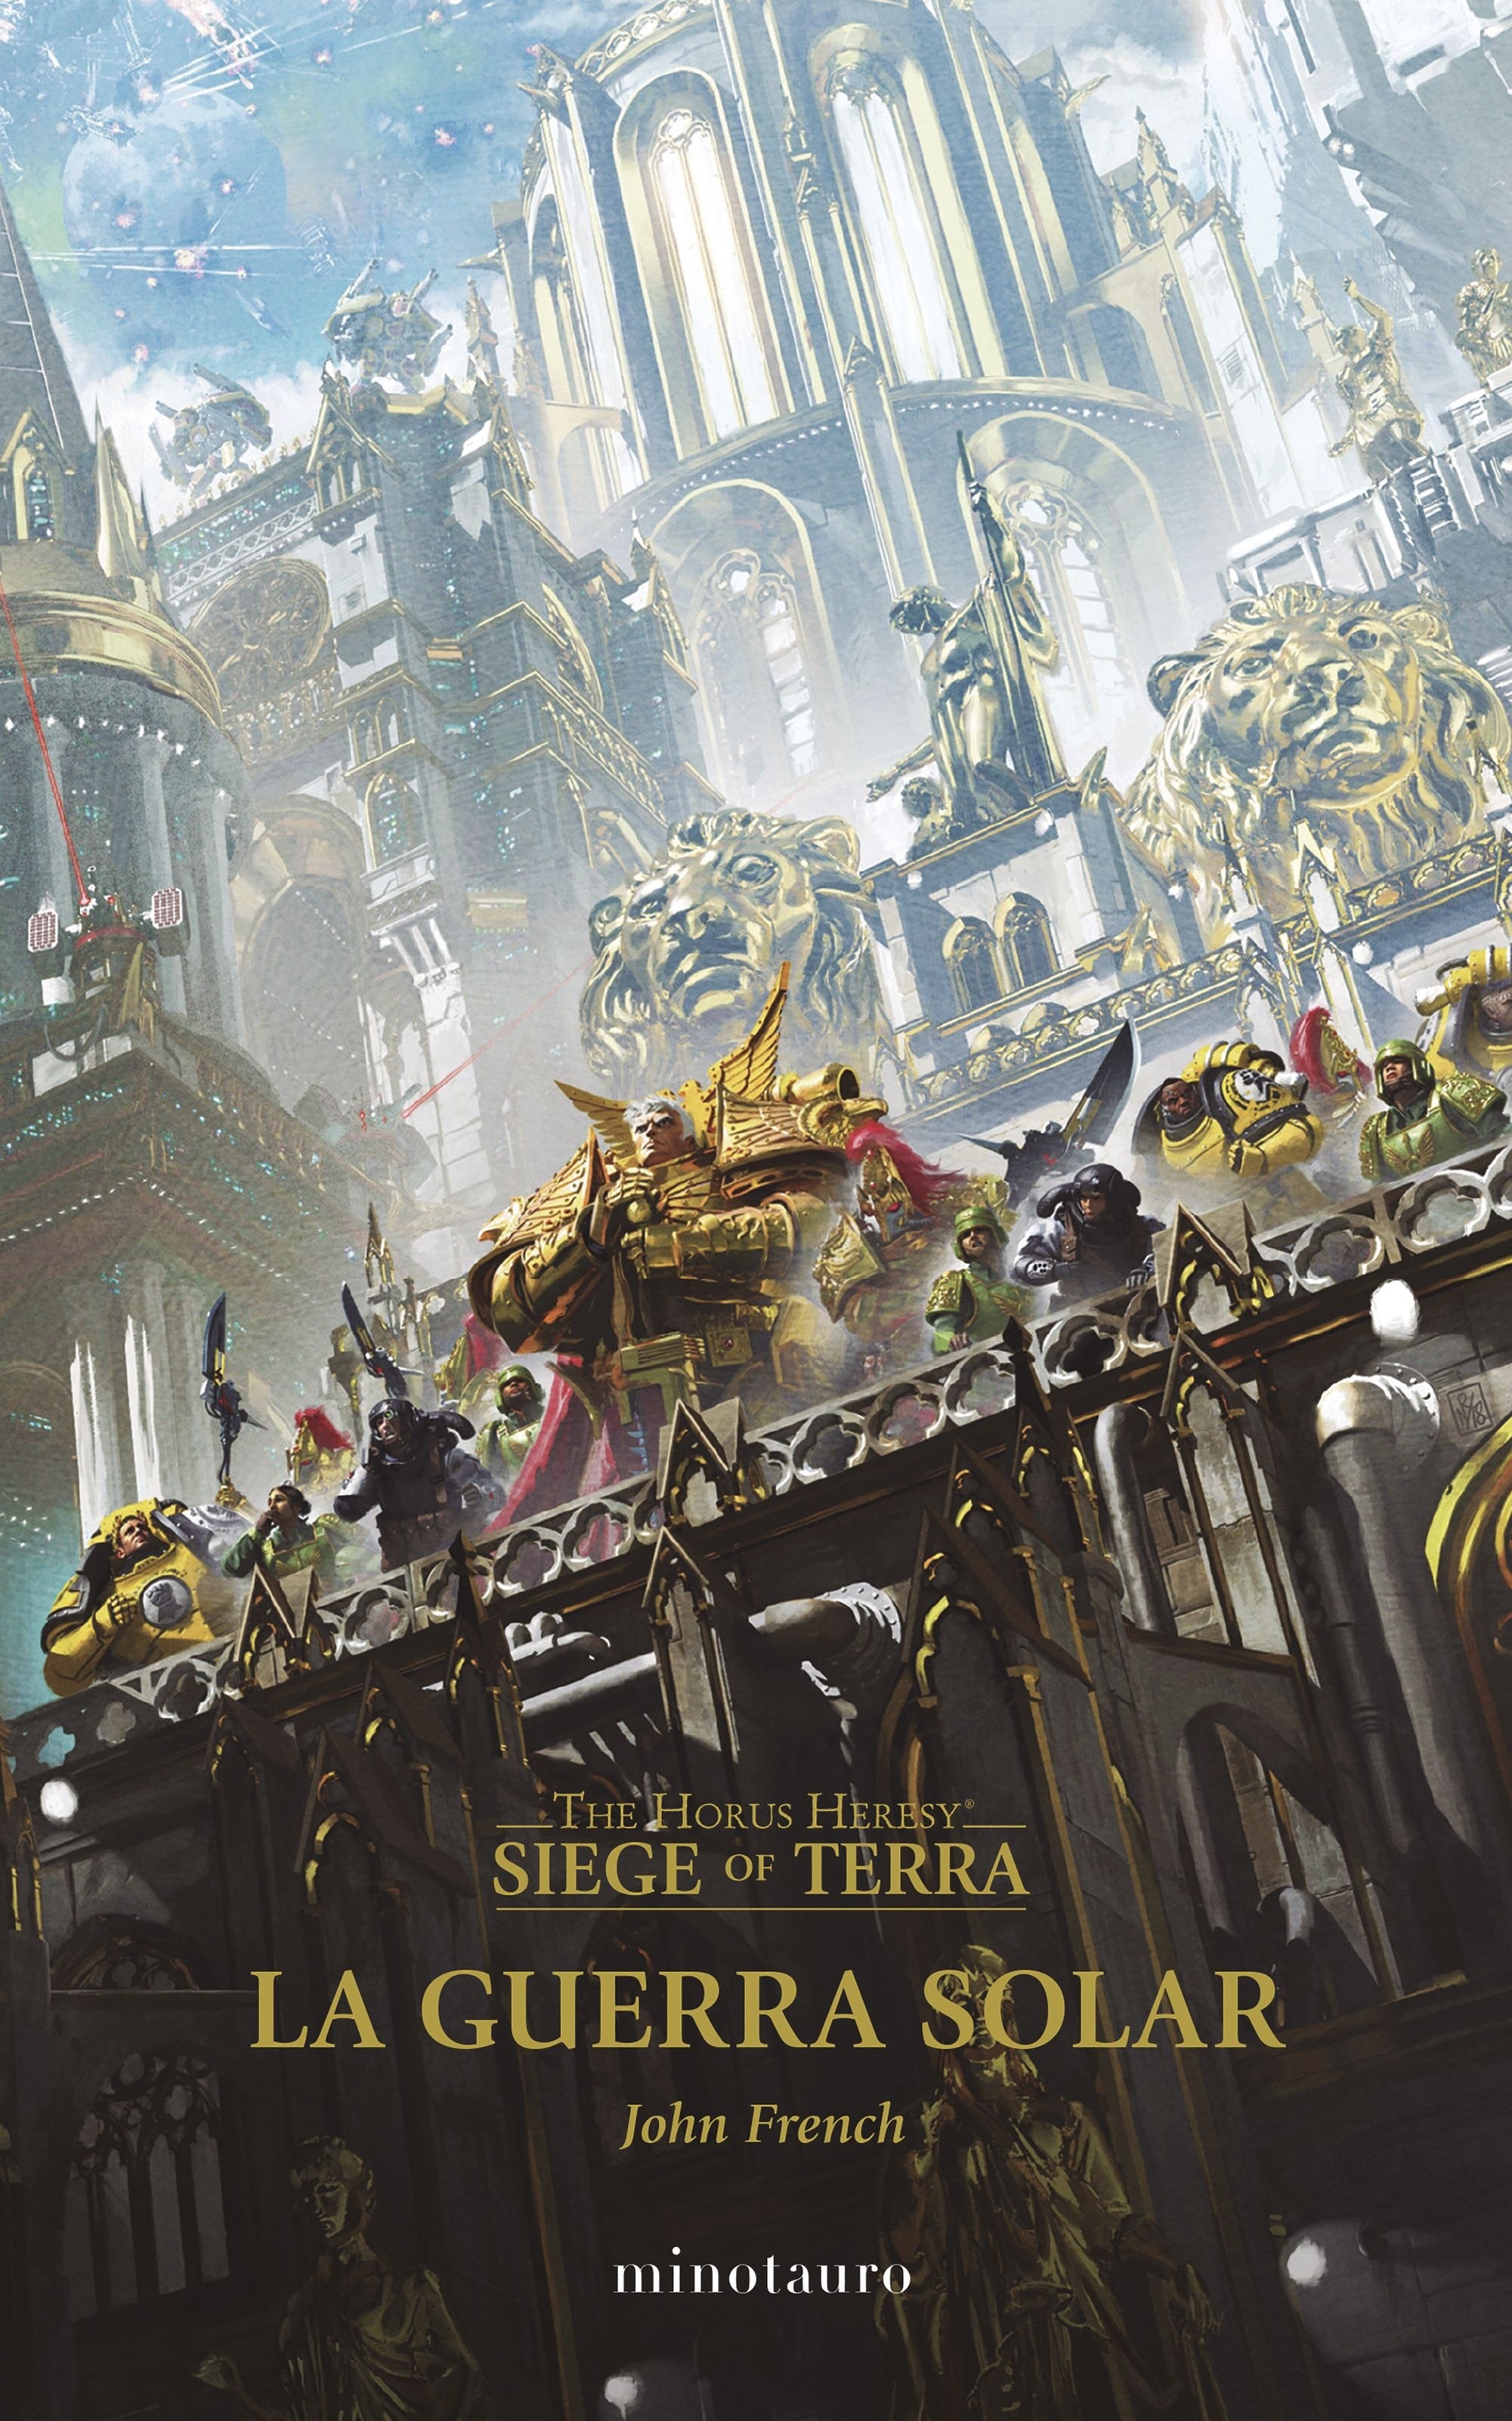 The Horus Heresy: Siege of Terra 1. La Guerra Solar "Siege of Terra"